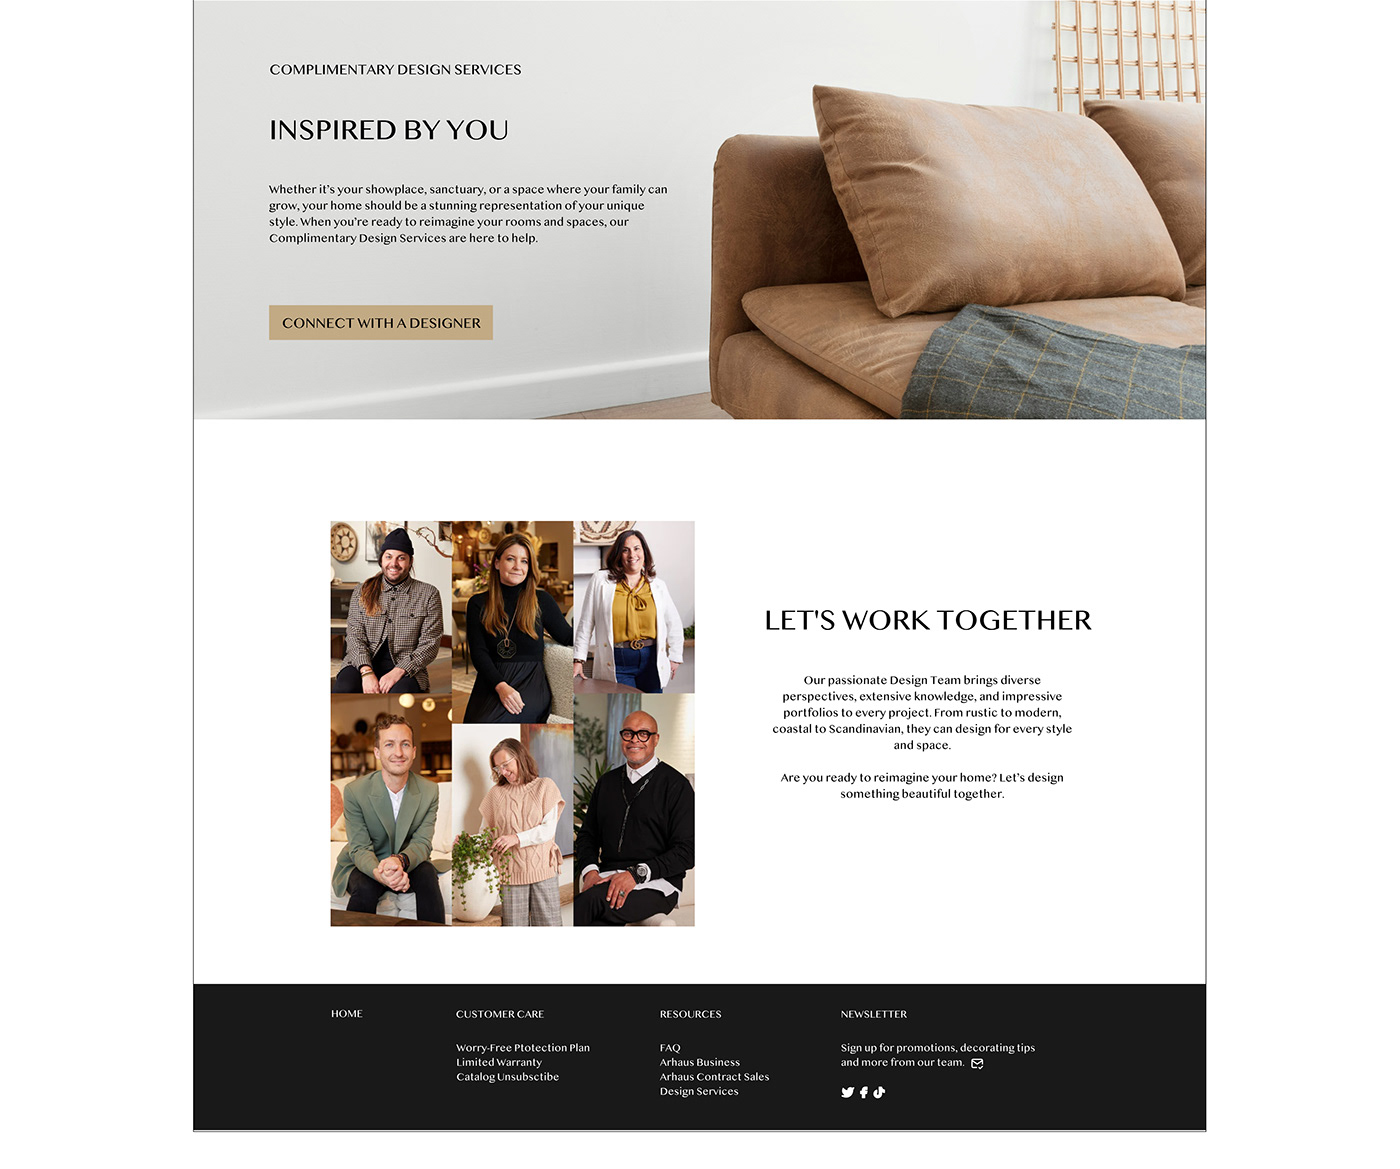 e-commerce furniture furniture store Interior online store store Web Design  UX UI интернет-магазин мебель